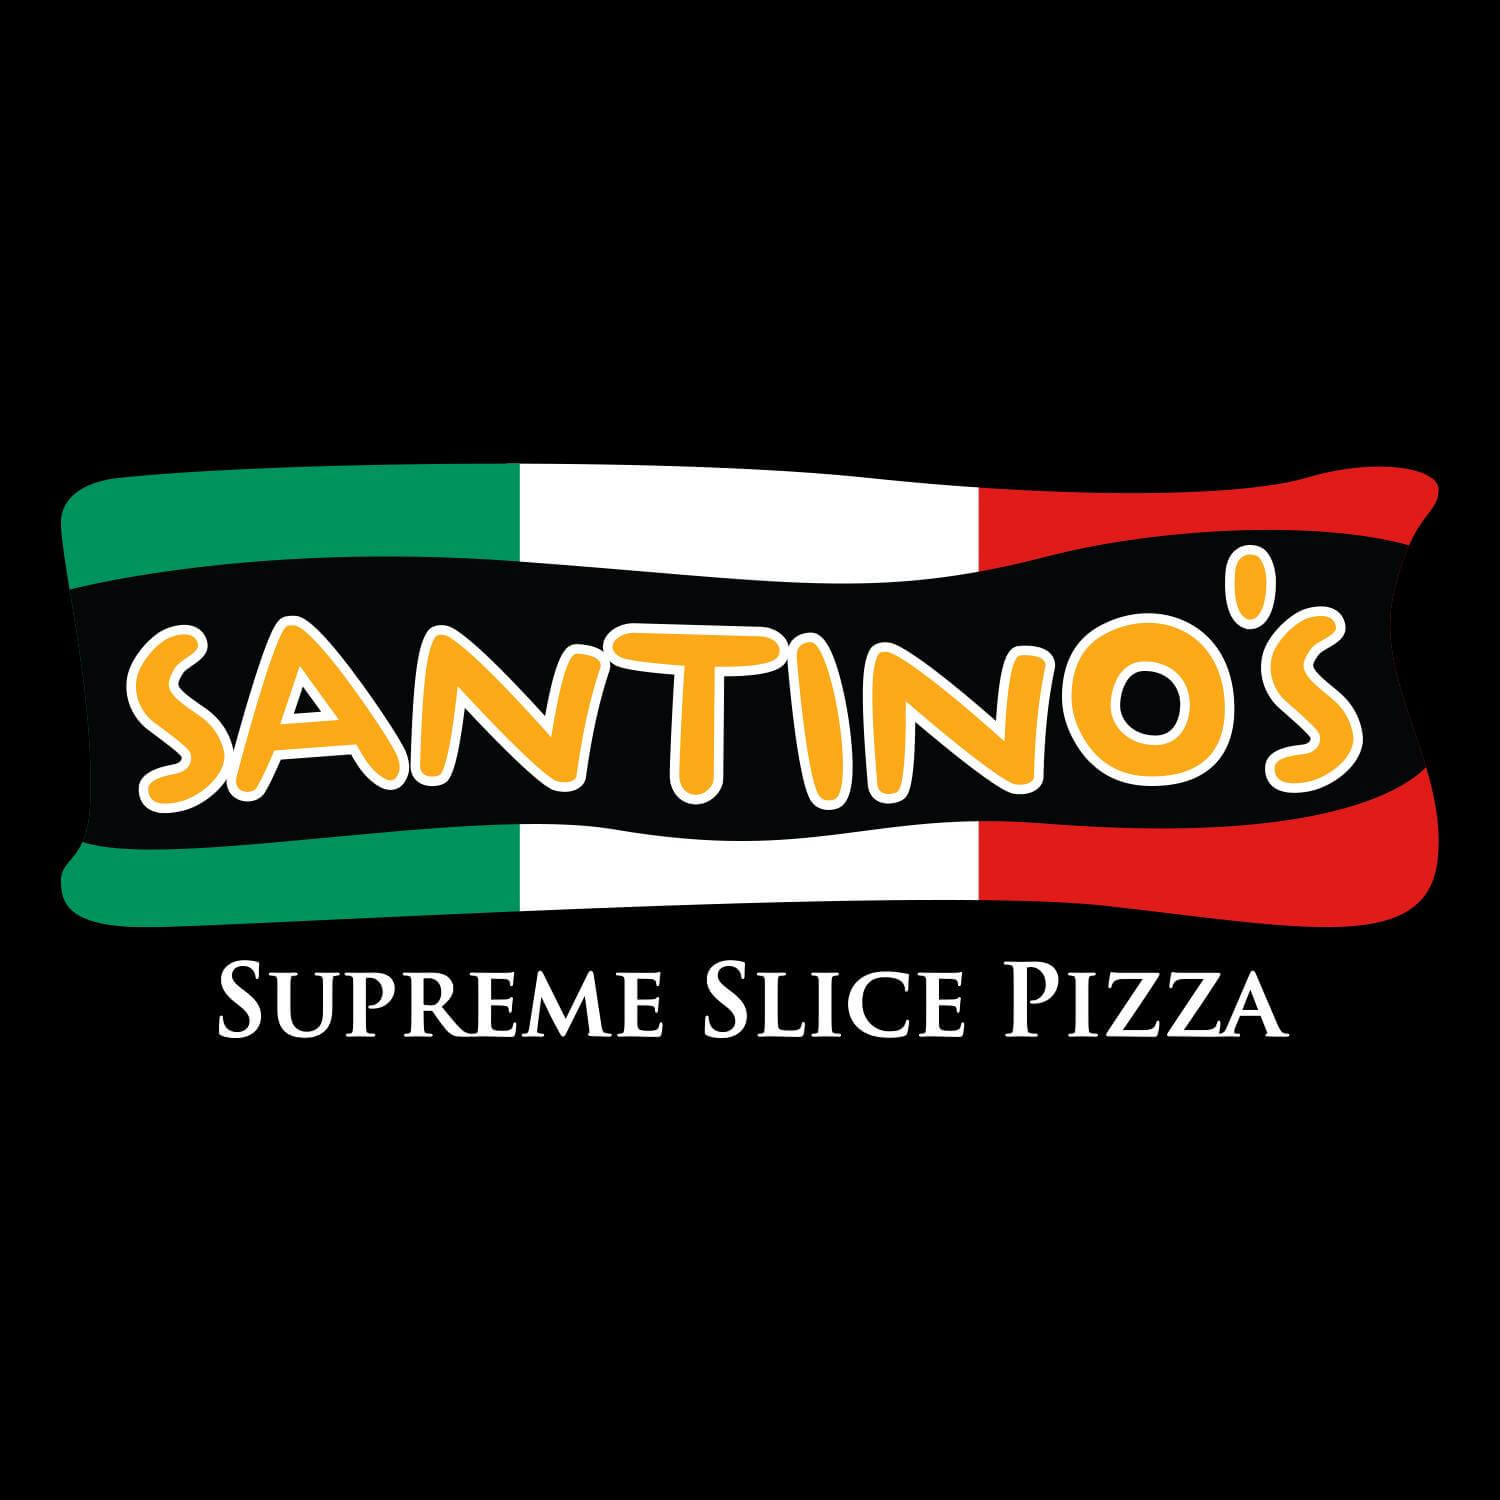 Santino's Supreme Slice